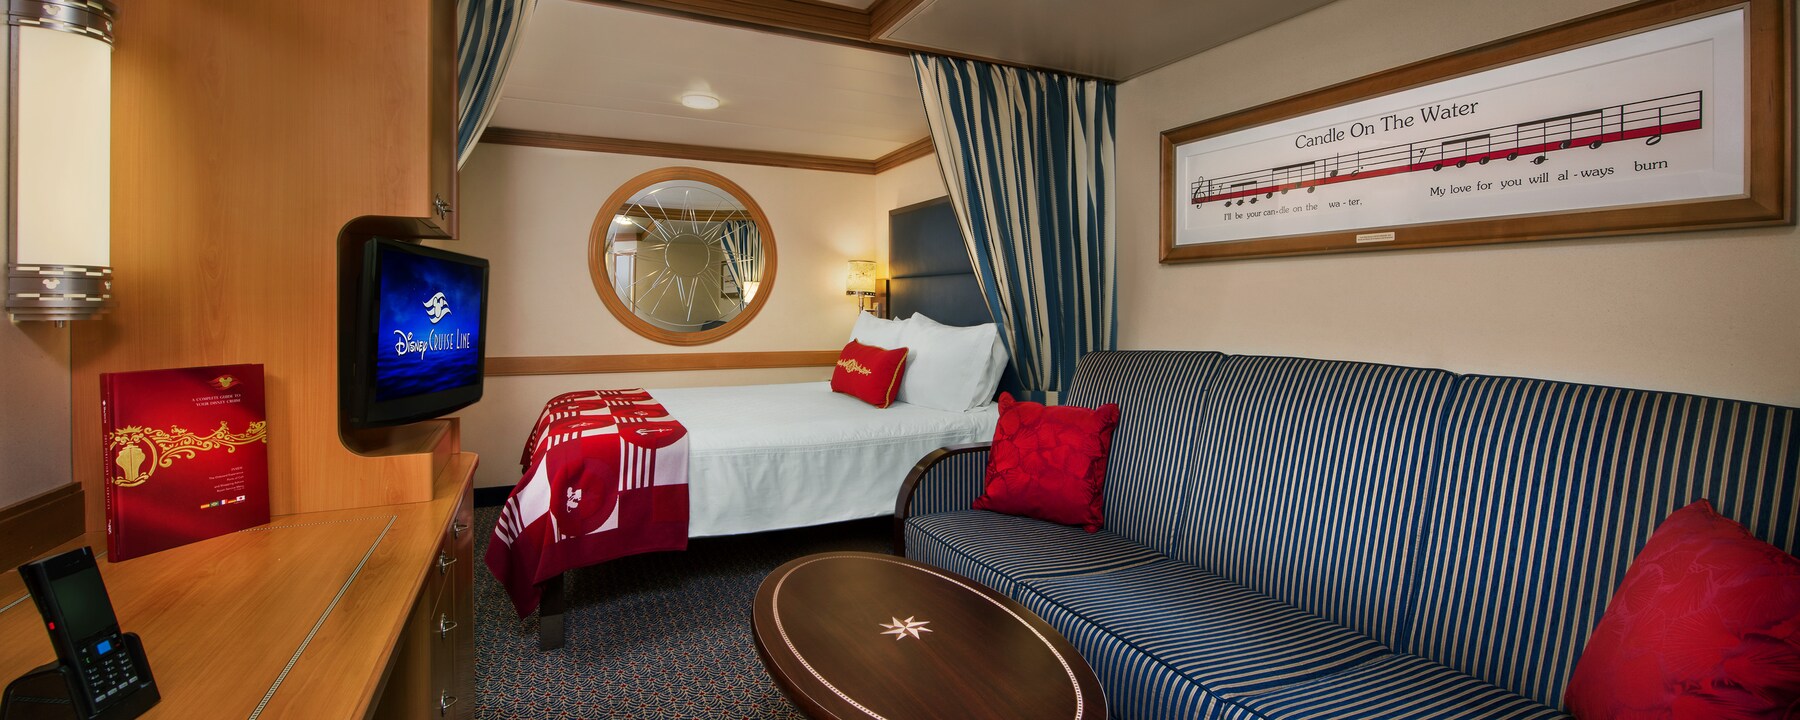 disney cruise line stateroom pictures